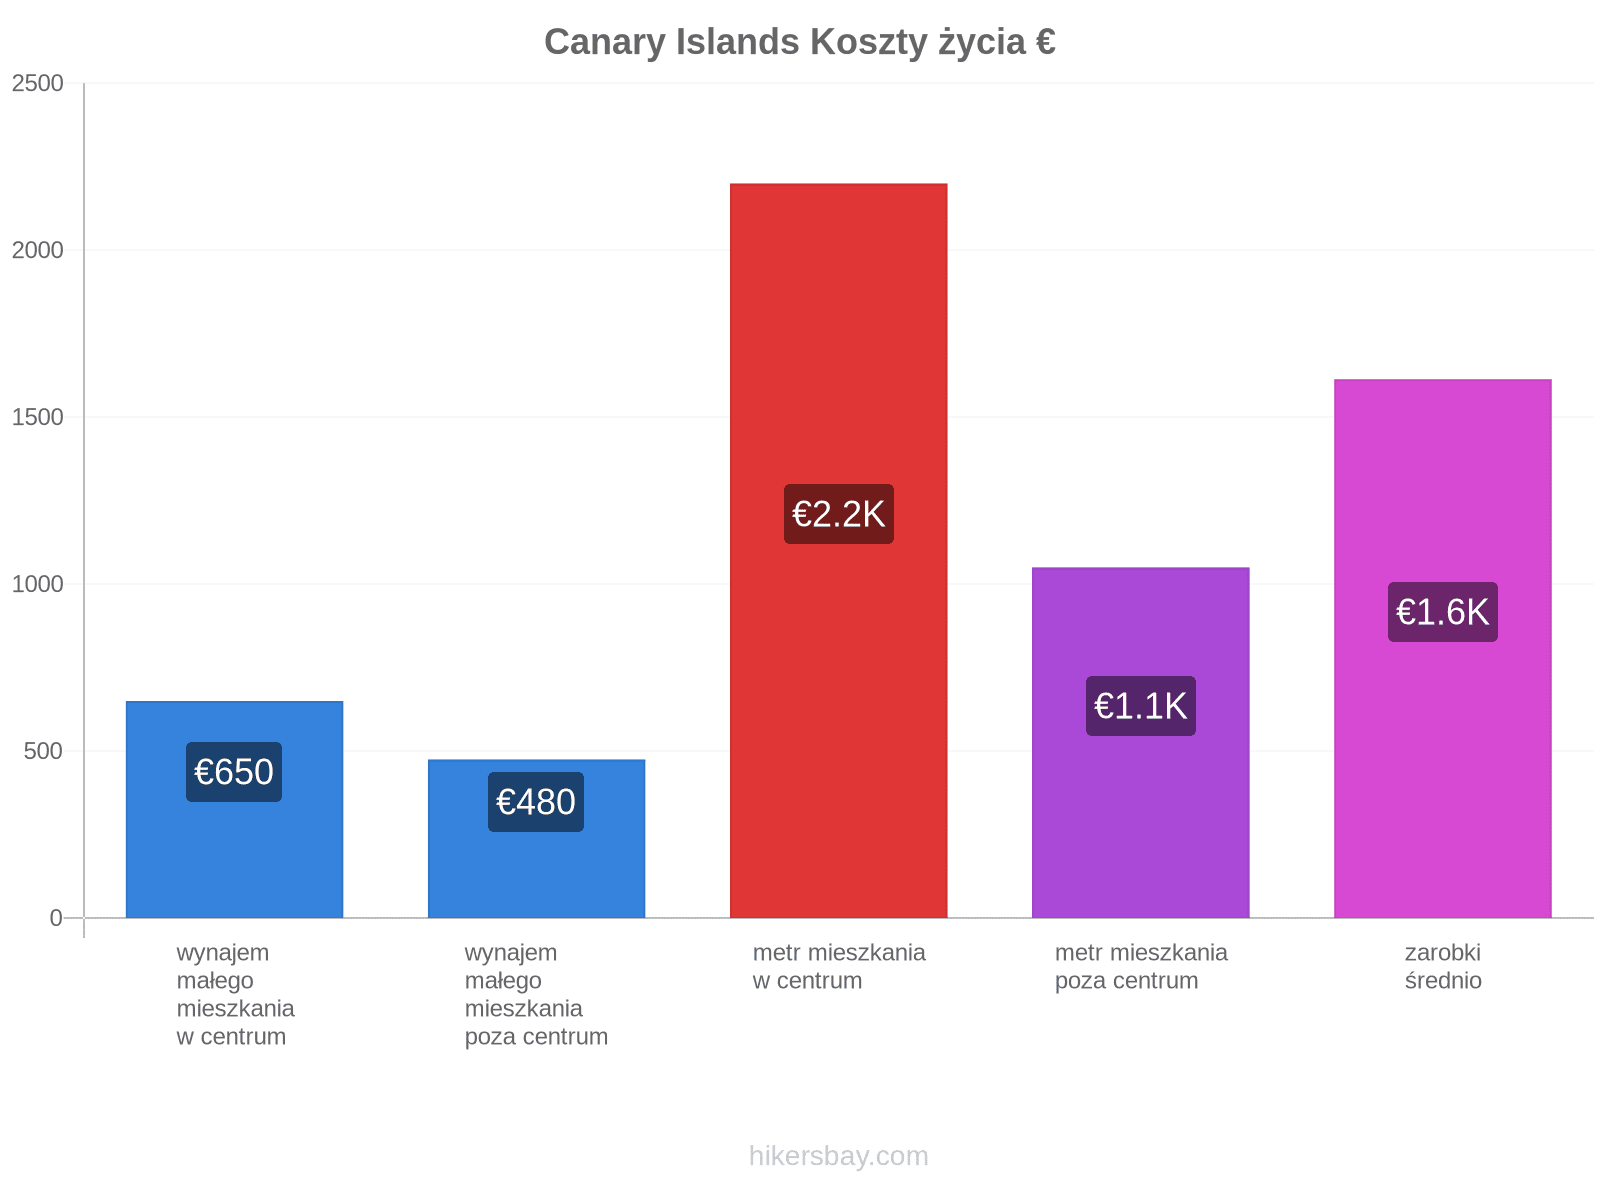 Canary Islands koszty życia hikersbay.com